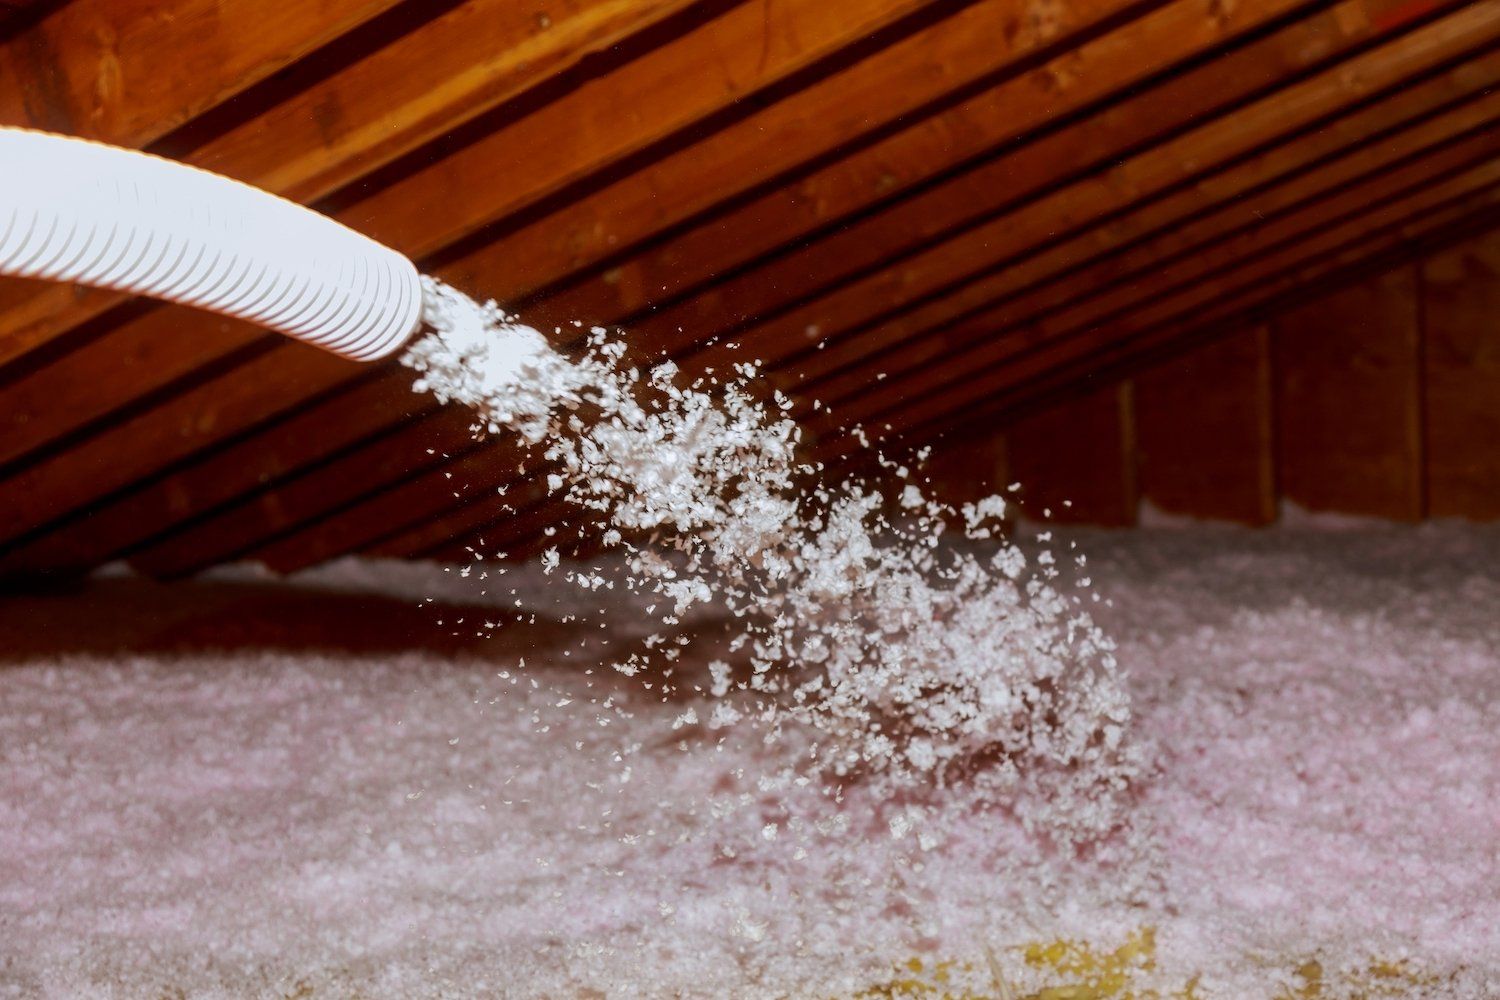 Get Blown-In Fiberglass Insulation in Your Mid-Missouri Home With DK Spray Foam & Insulation